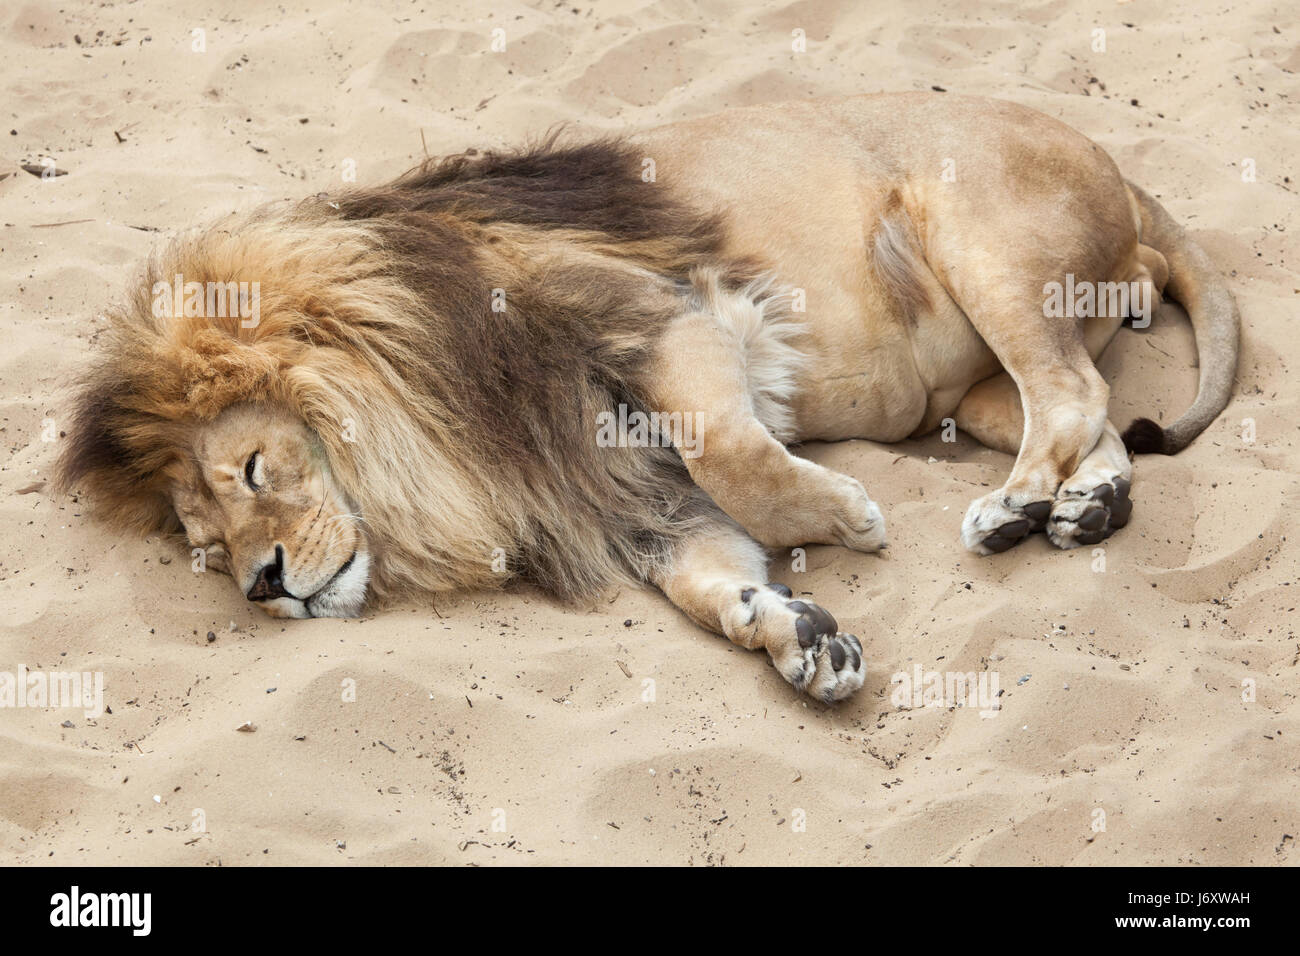 Lion (Panthera leo). Wildlife animal. Stock Photo